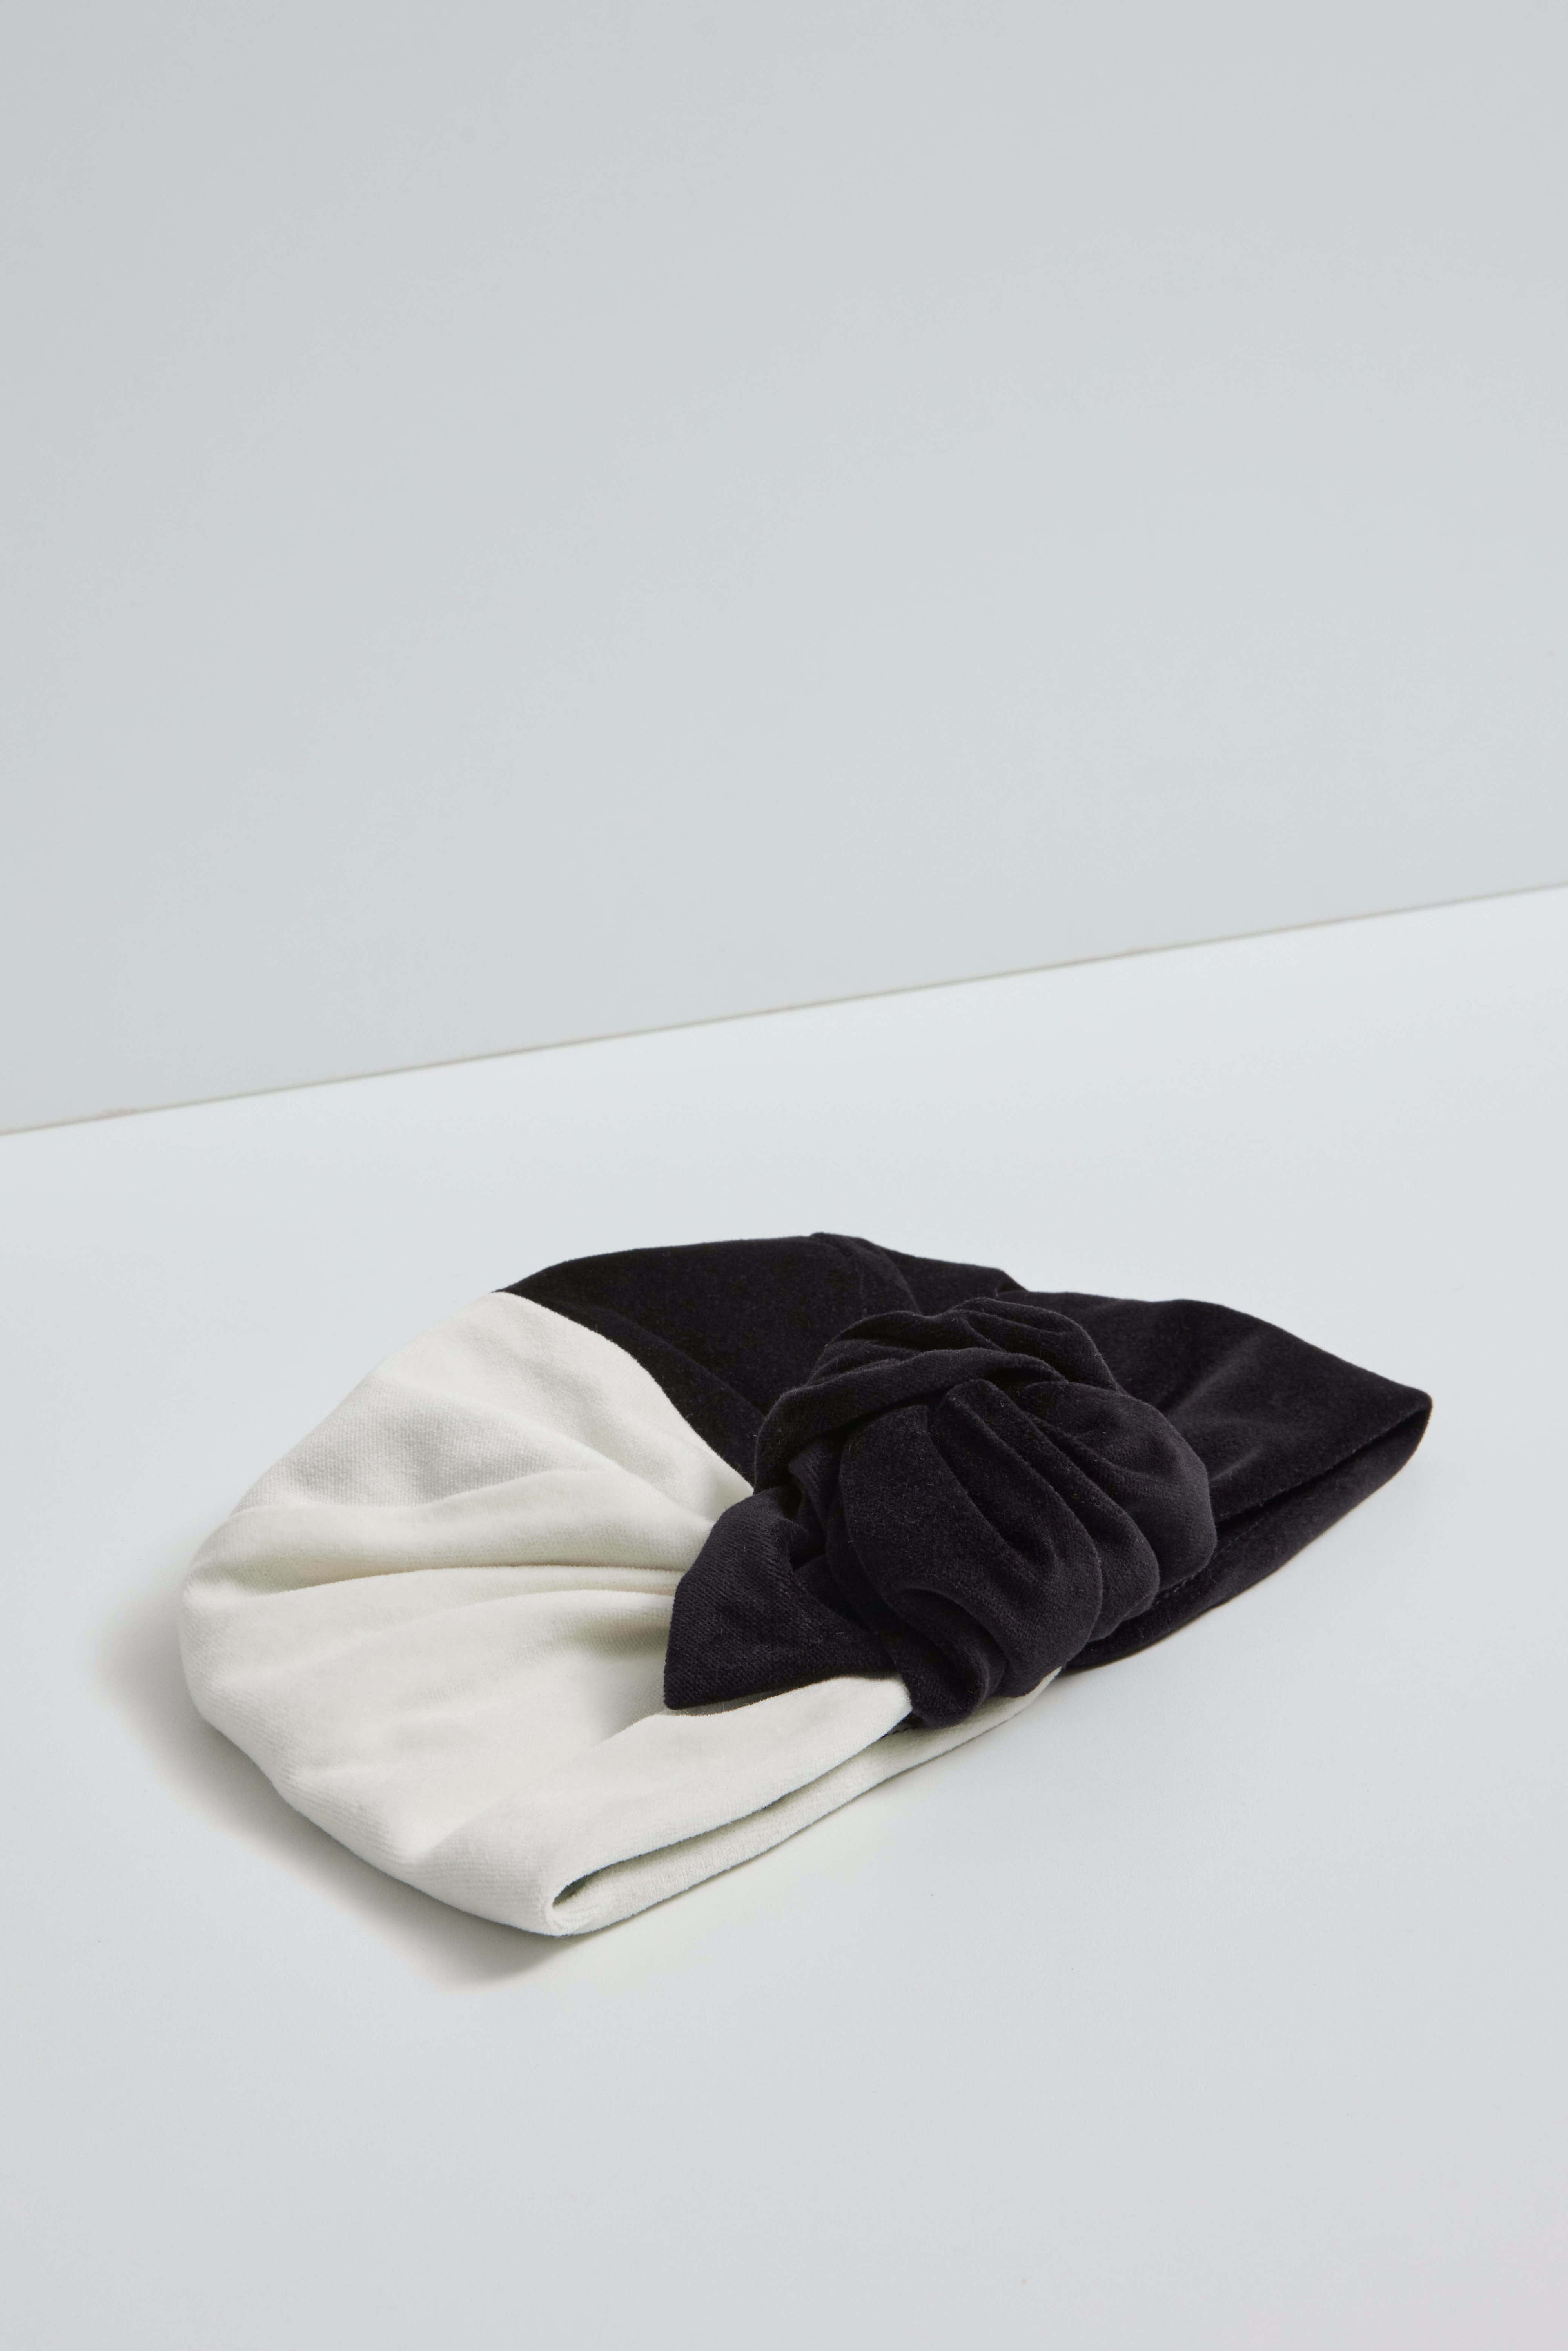 Parelli knotted turban hat - Black and white velvet